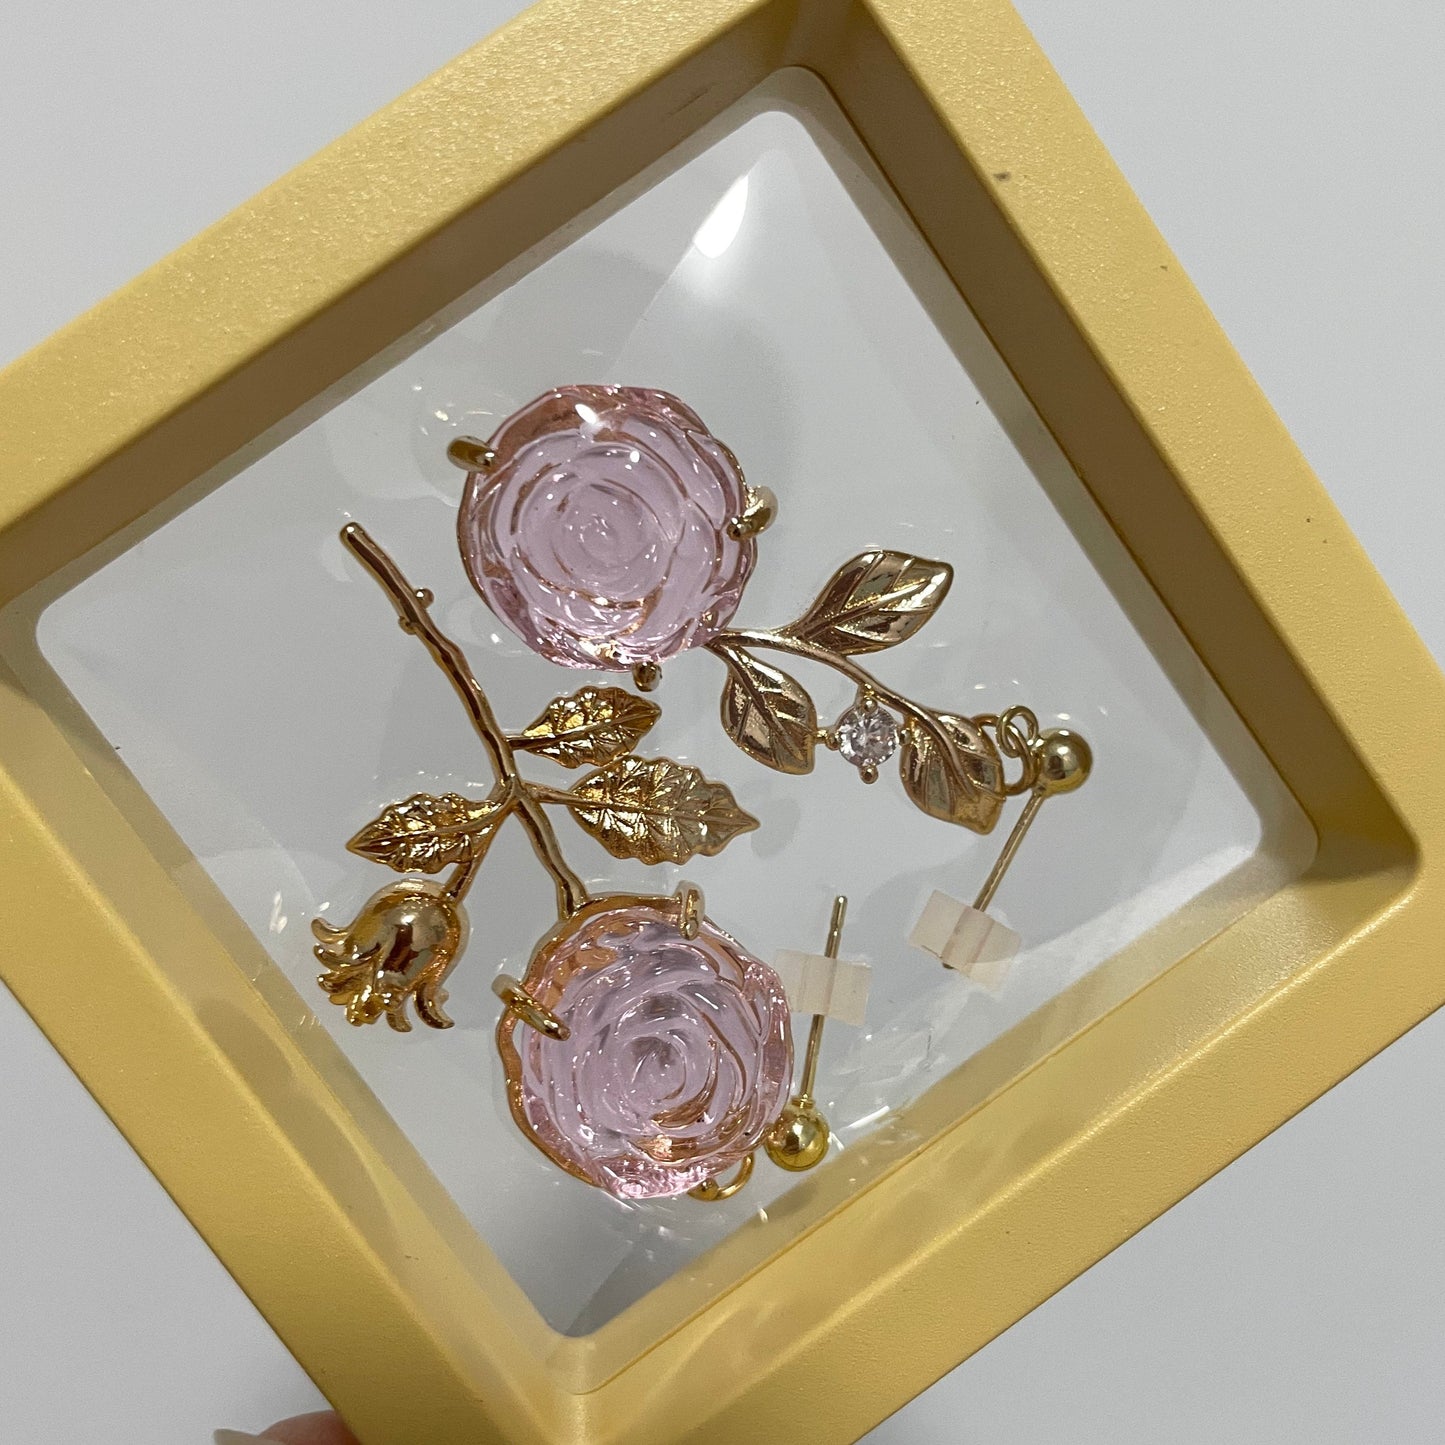 Asymmetric Design Pink Rose Earrings B1226